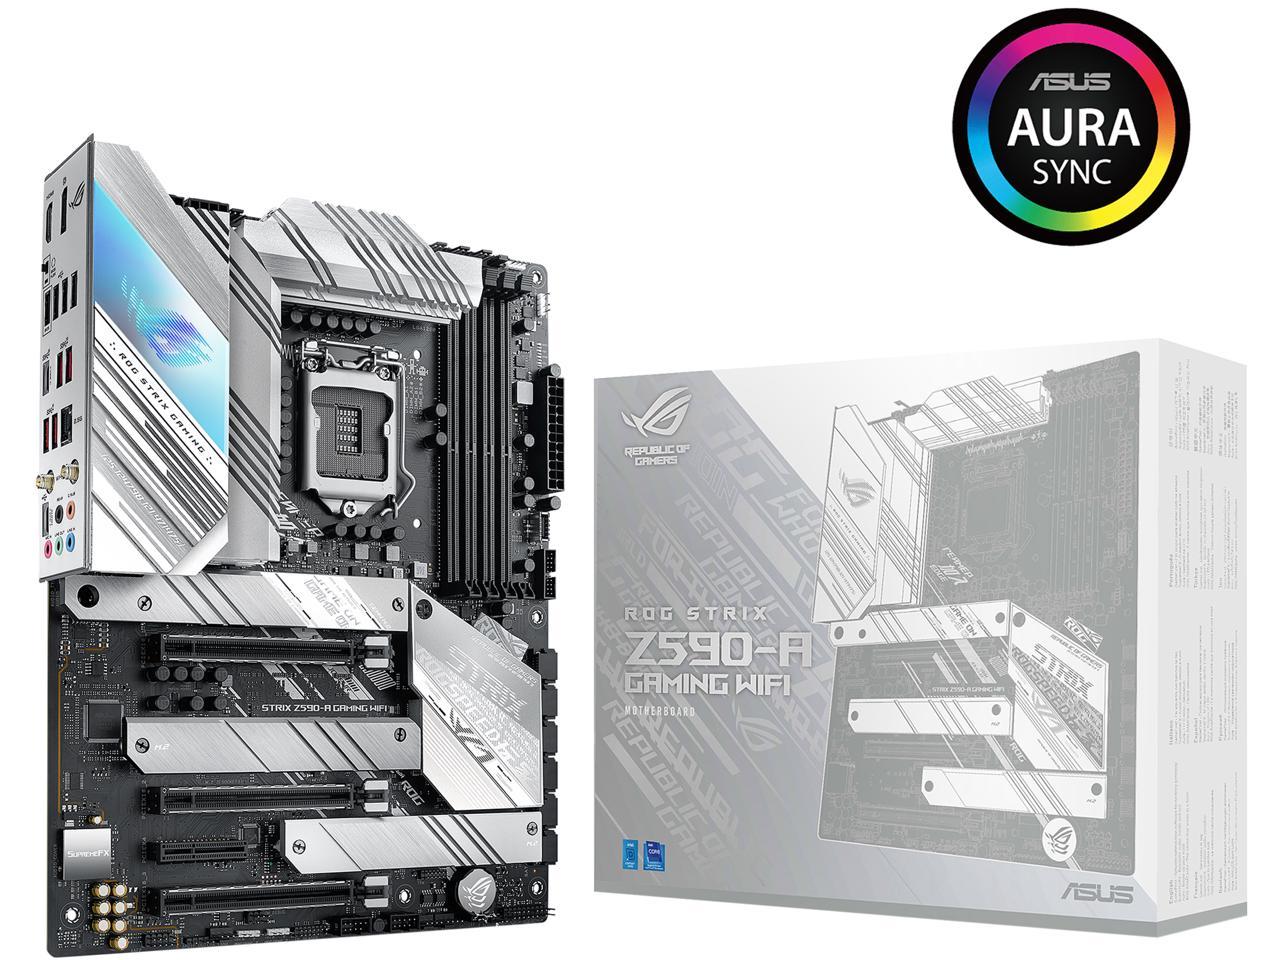 ASUS ROG STRIX Z590-A GAMING WIFI LGA 1200 Intel Z590 SATA 6Gb/s ATX Intel Motherboard